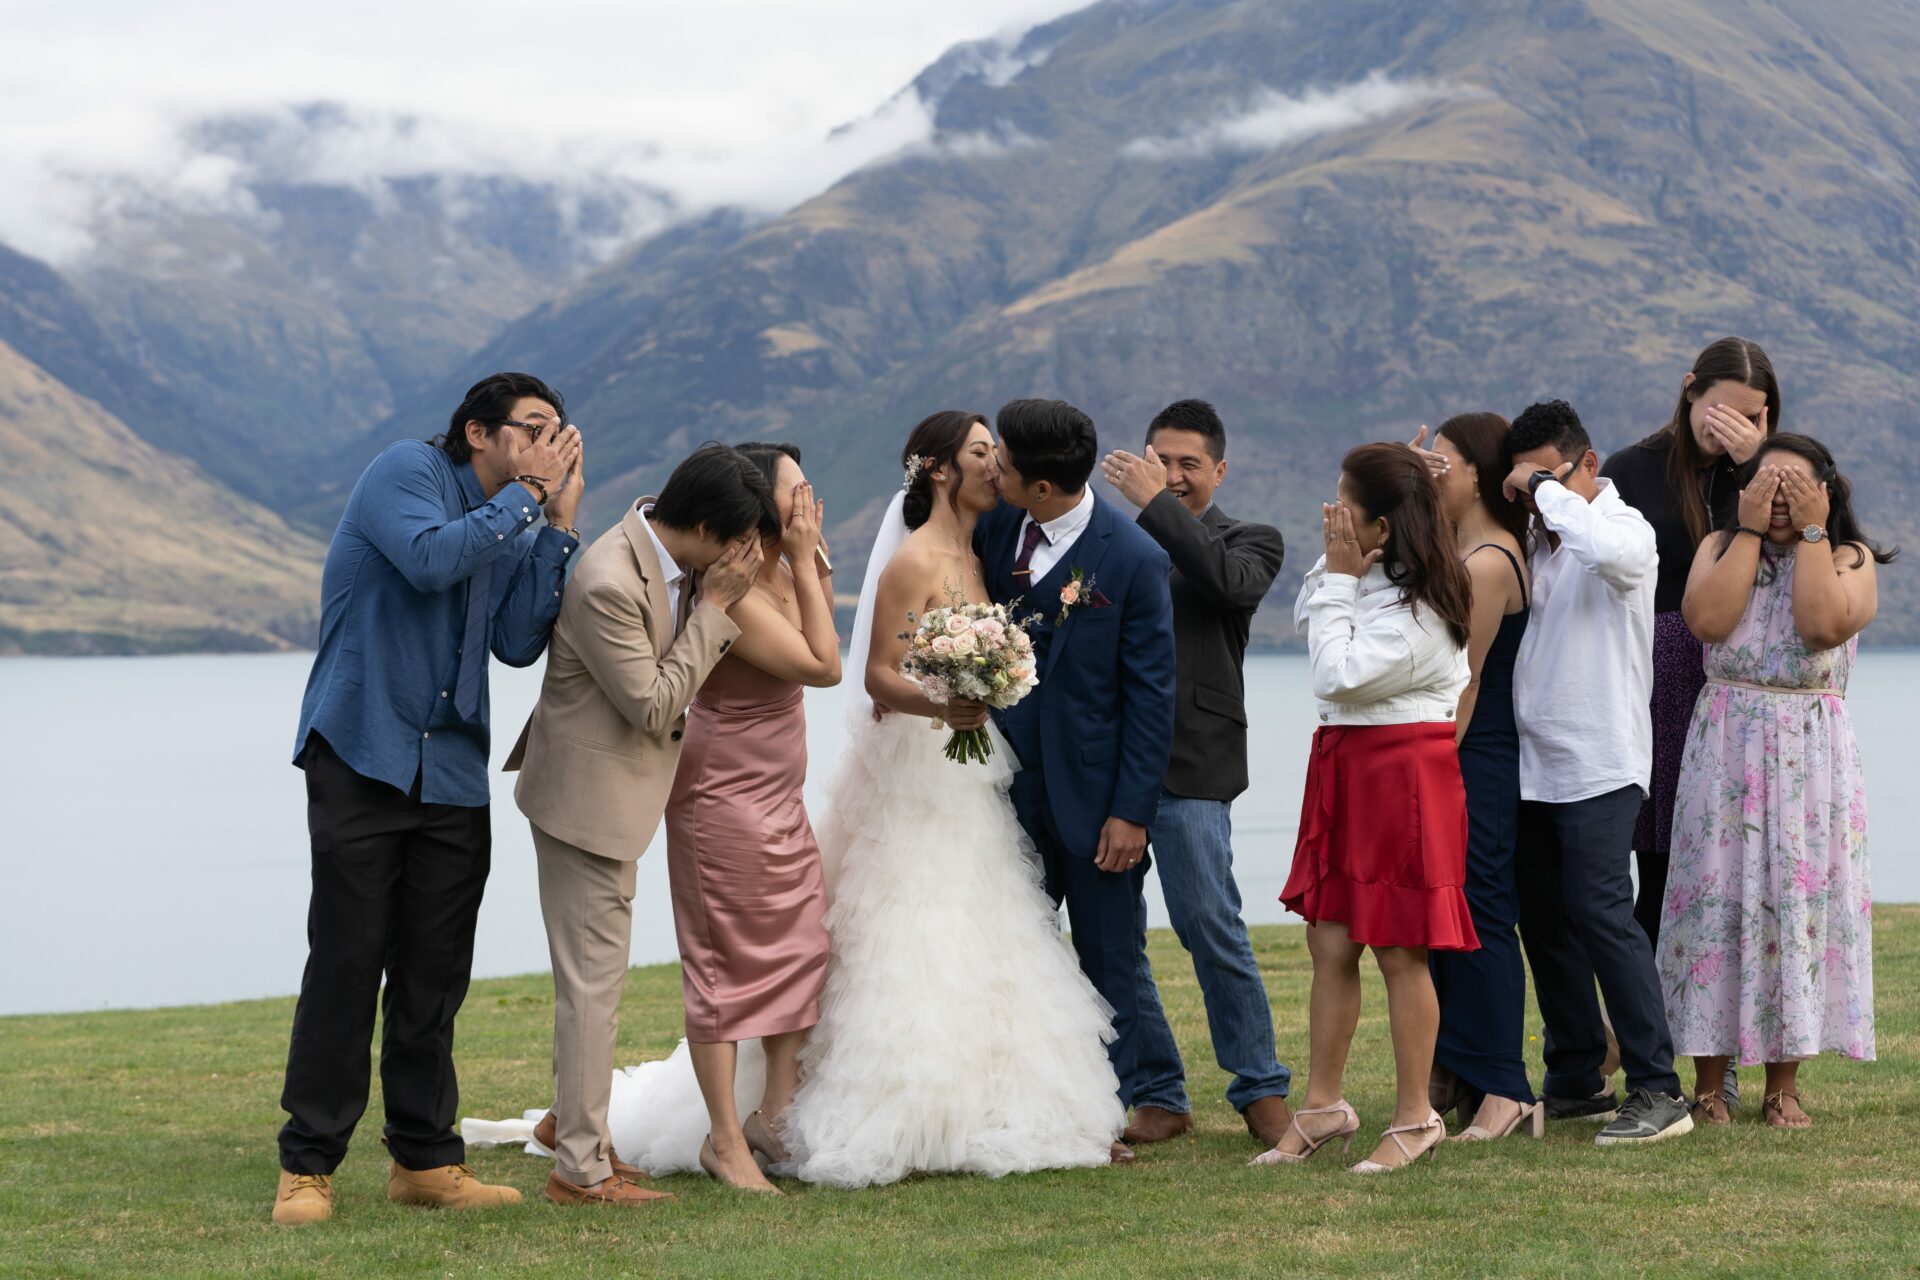 Should You Elope or Have a Big Wedding? Let’s Help You Decide